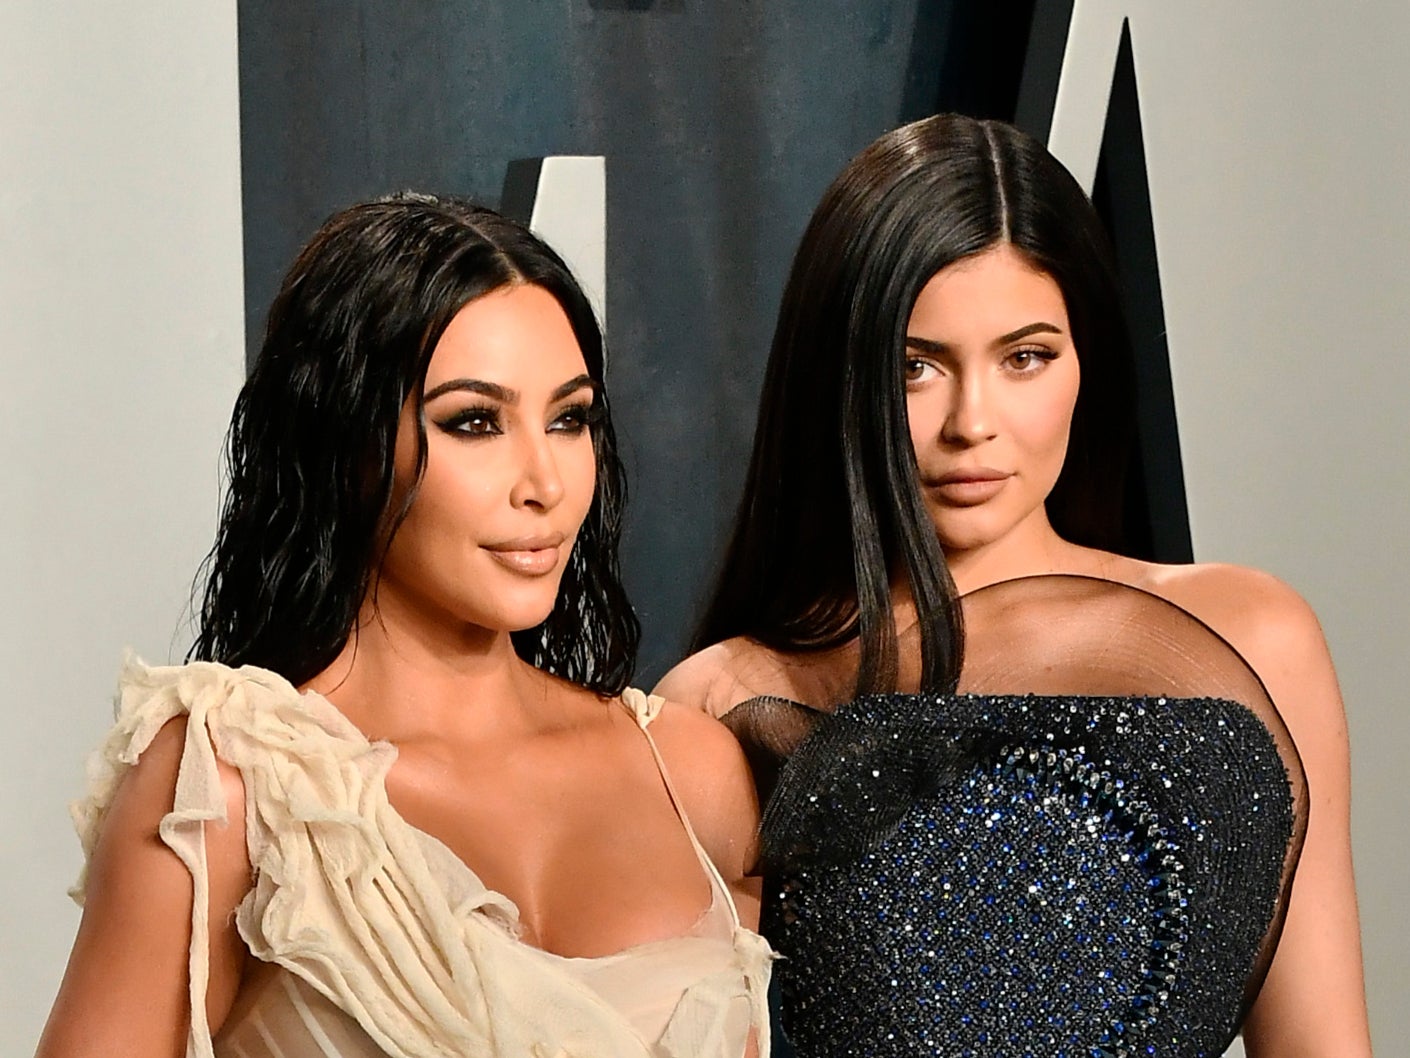 Kim Kardashian and Kylie Jenner (R) attend the 2020 Vanity Fair Oscar Party